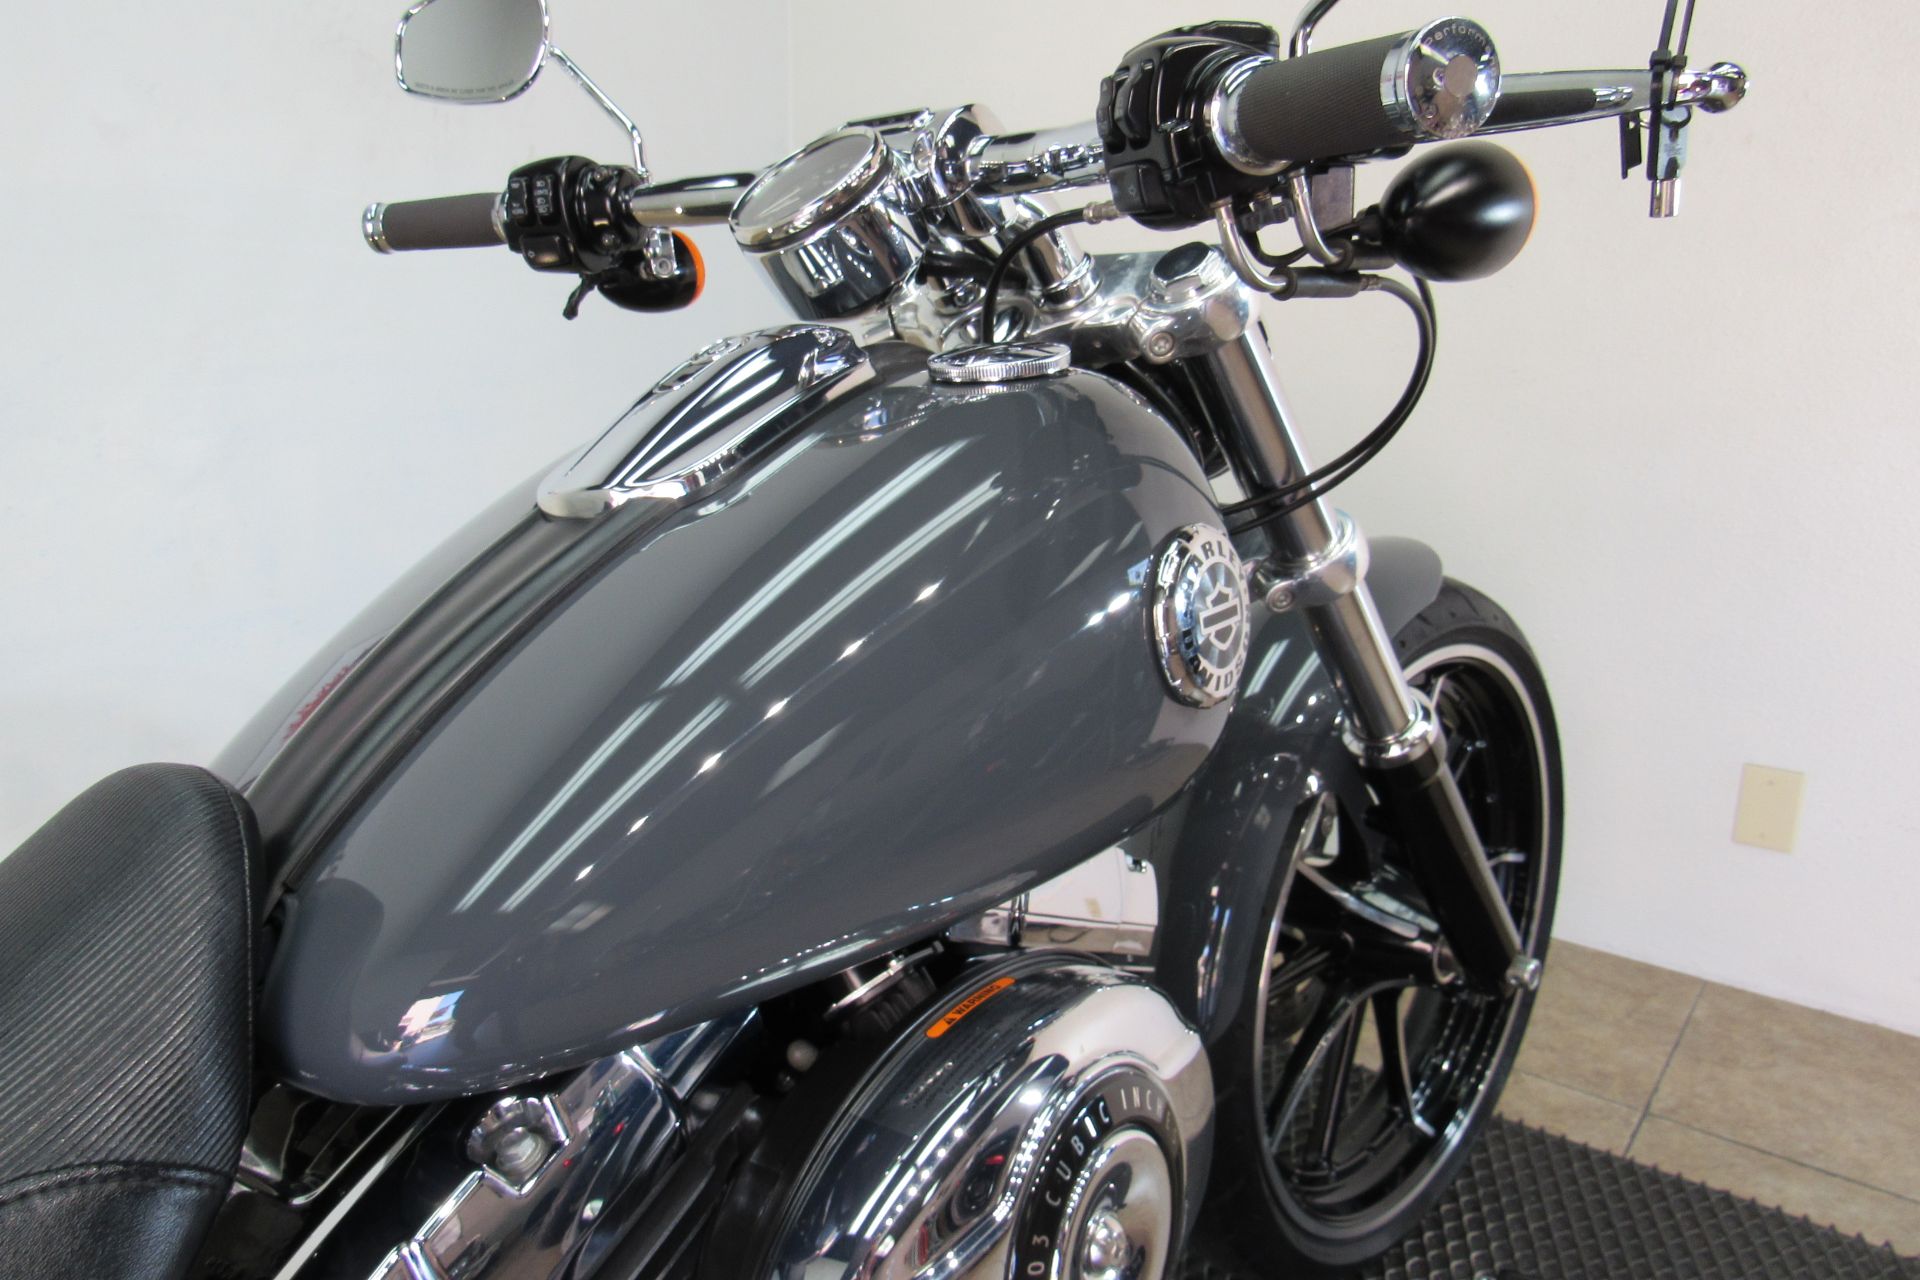 2015 Harley-Davidson Breakout® in Temecula, California - Photo 19